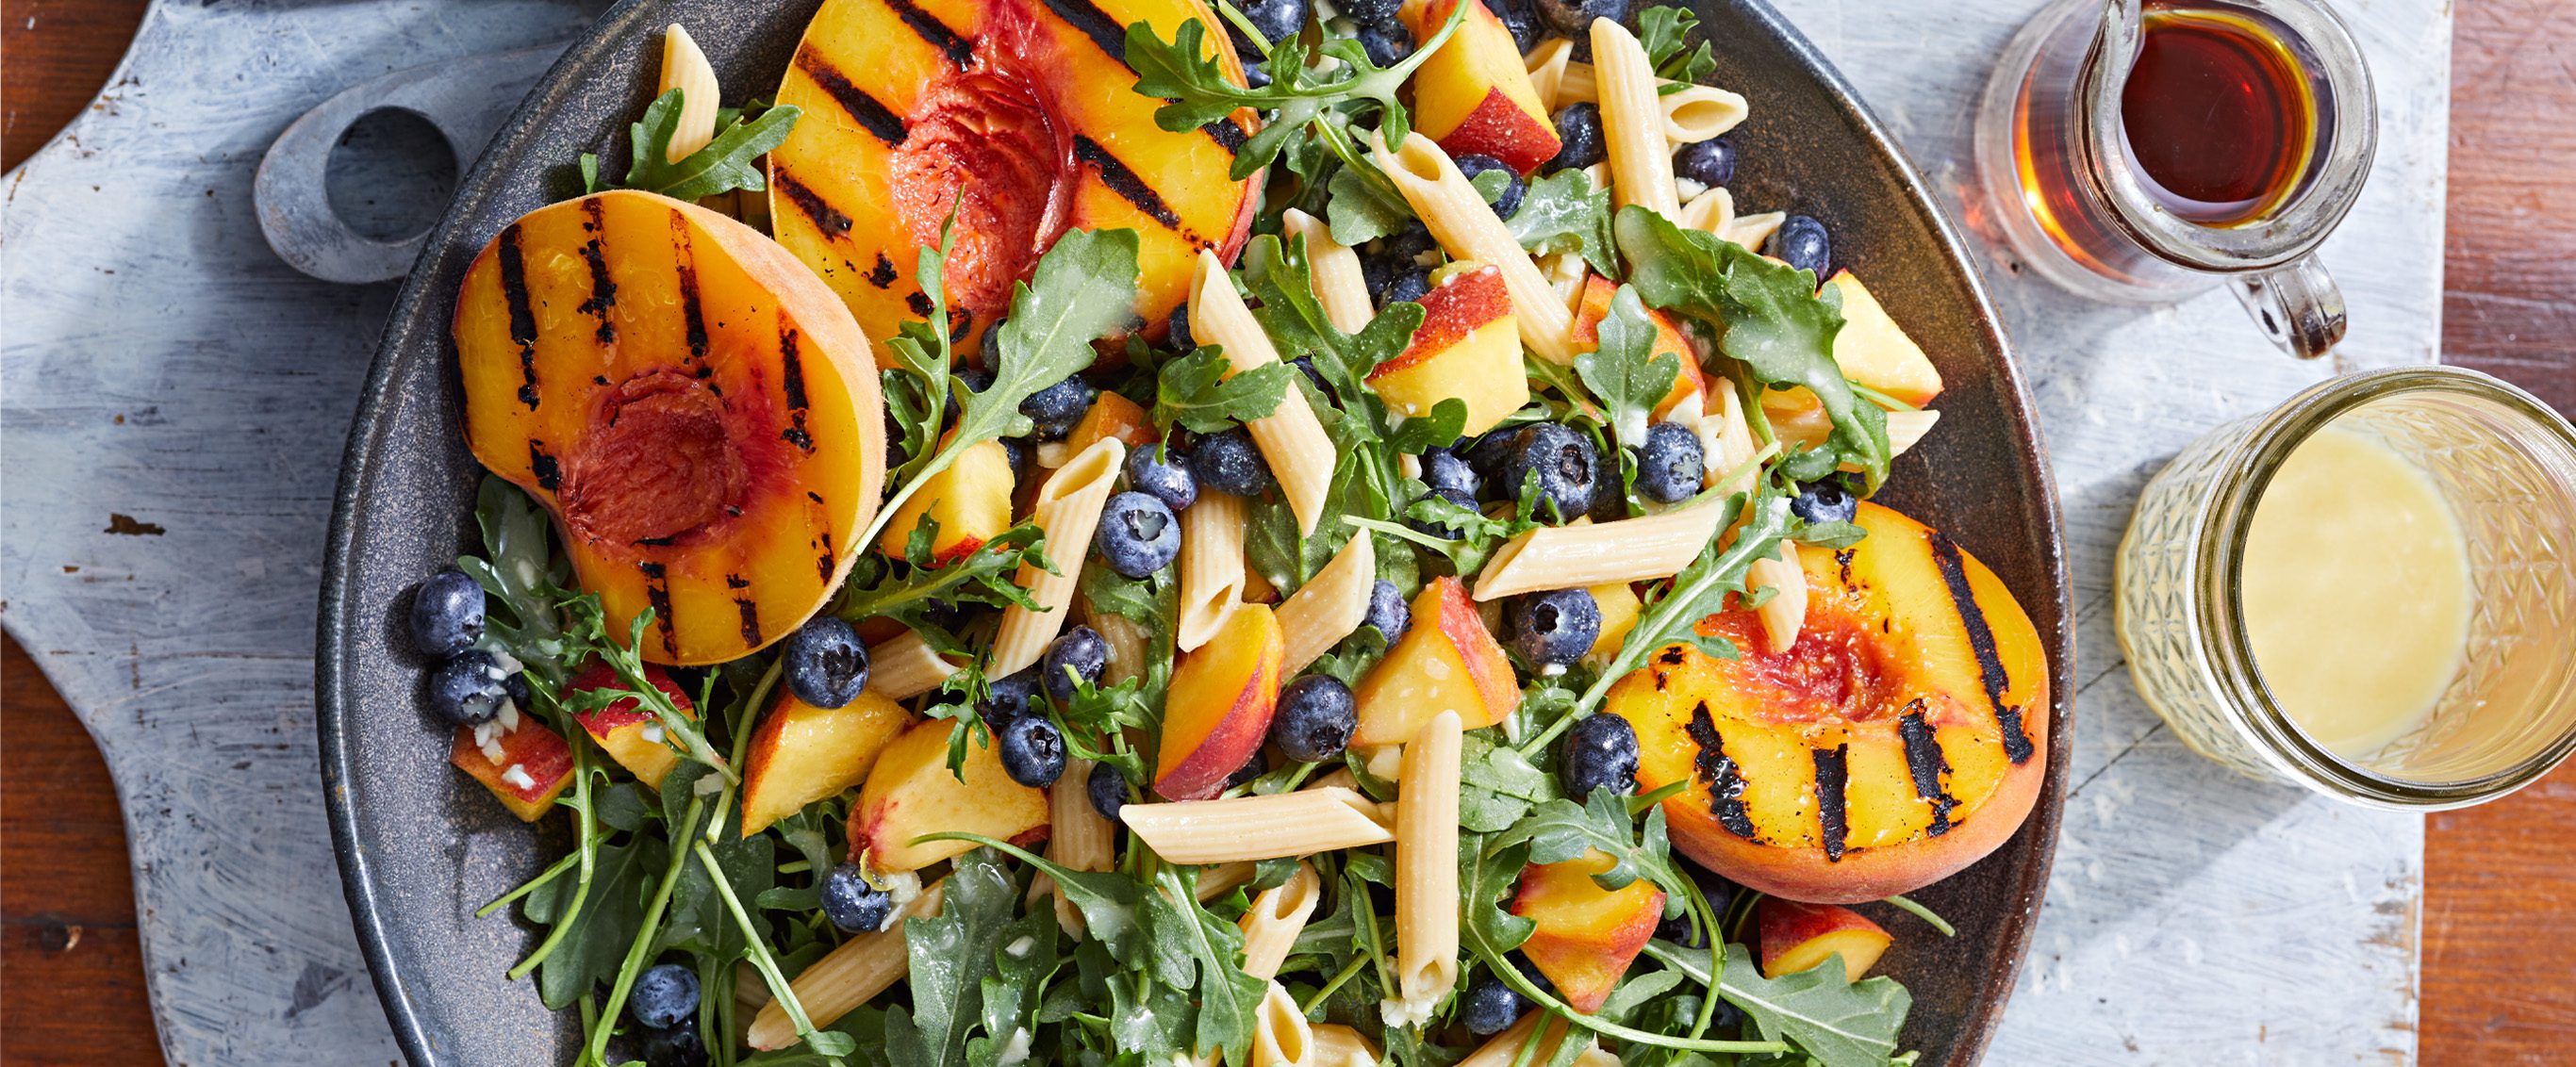 Vegan Grill Recipes - Peach Blueberry Salad Wordpress